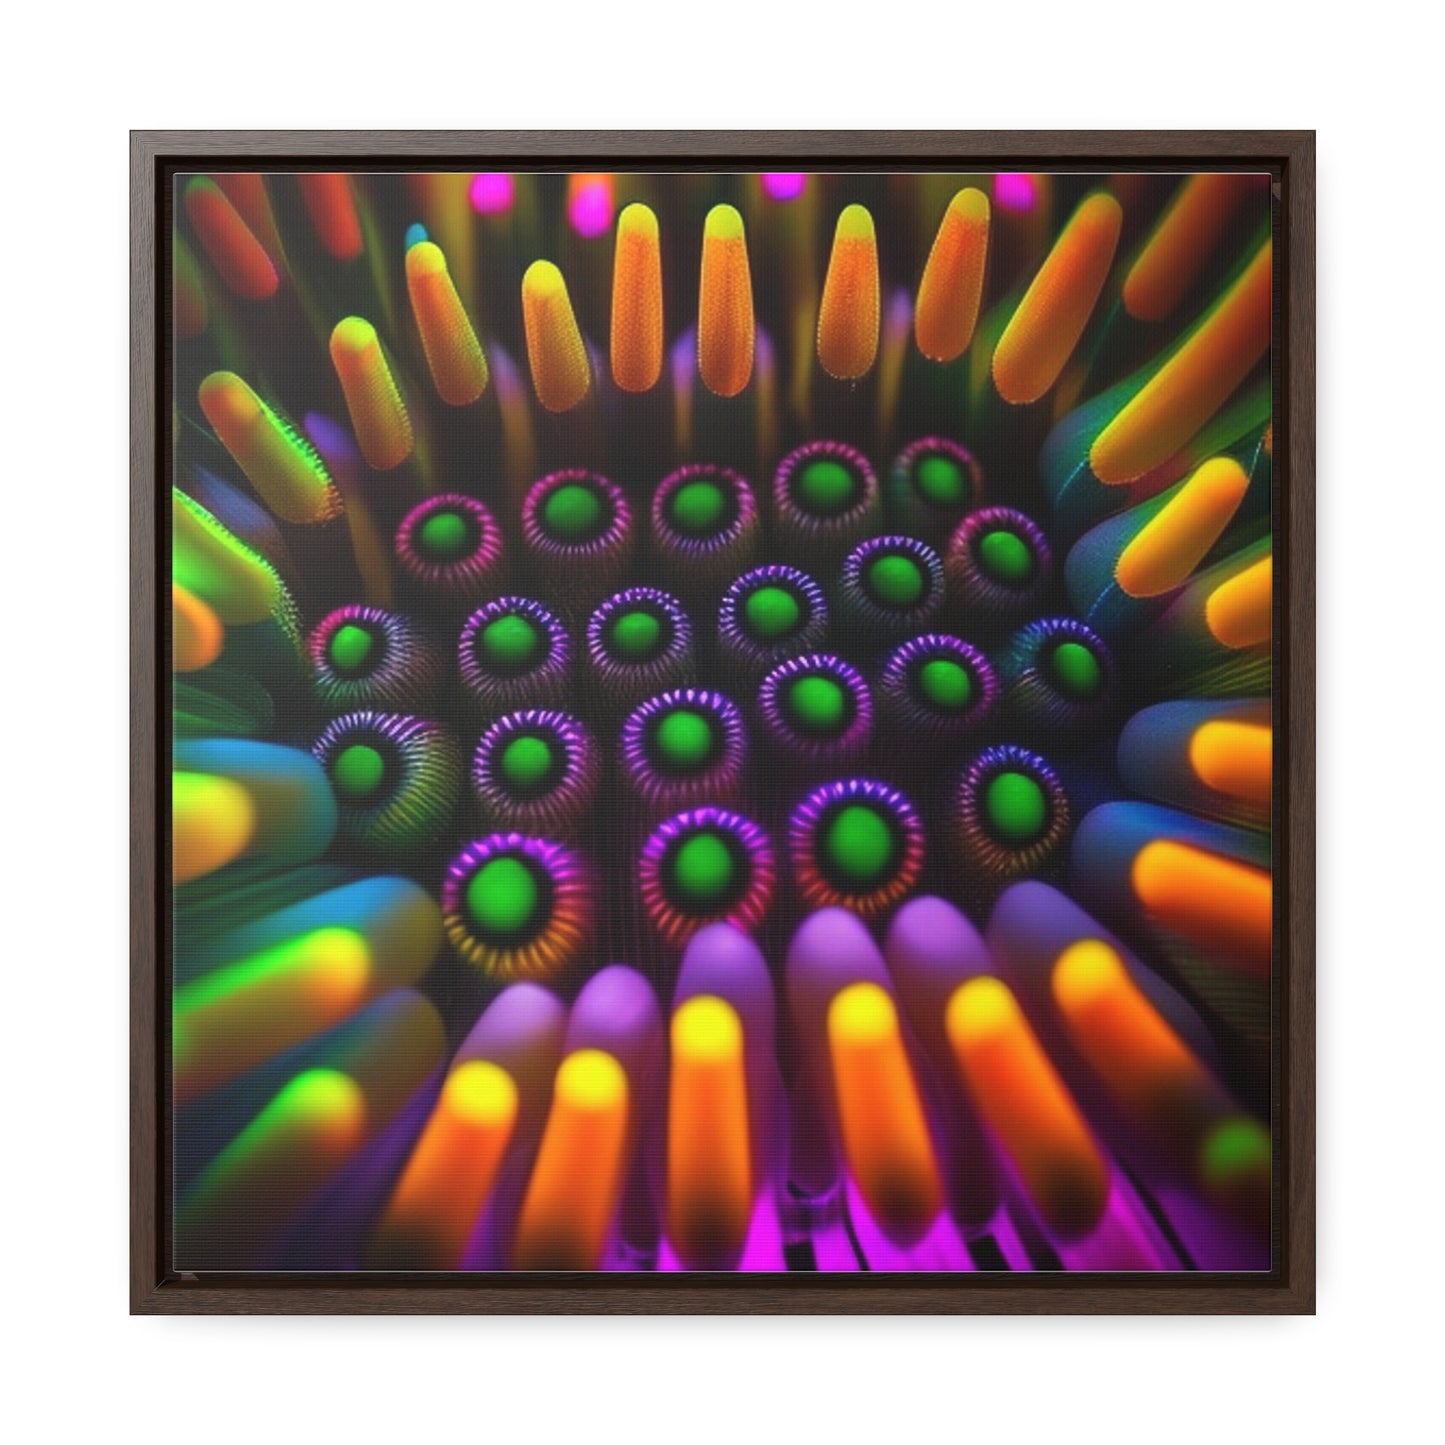 Gallery Canvas Wraps, Square Frame Macro Cactus neon square 4